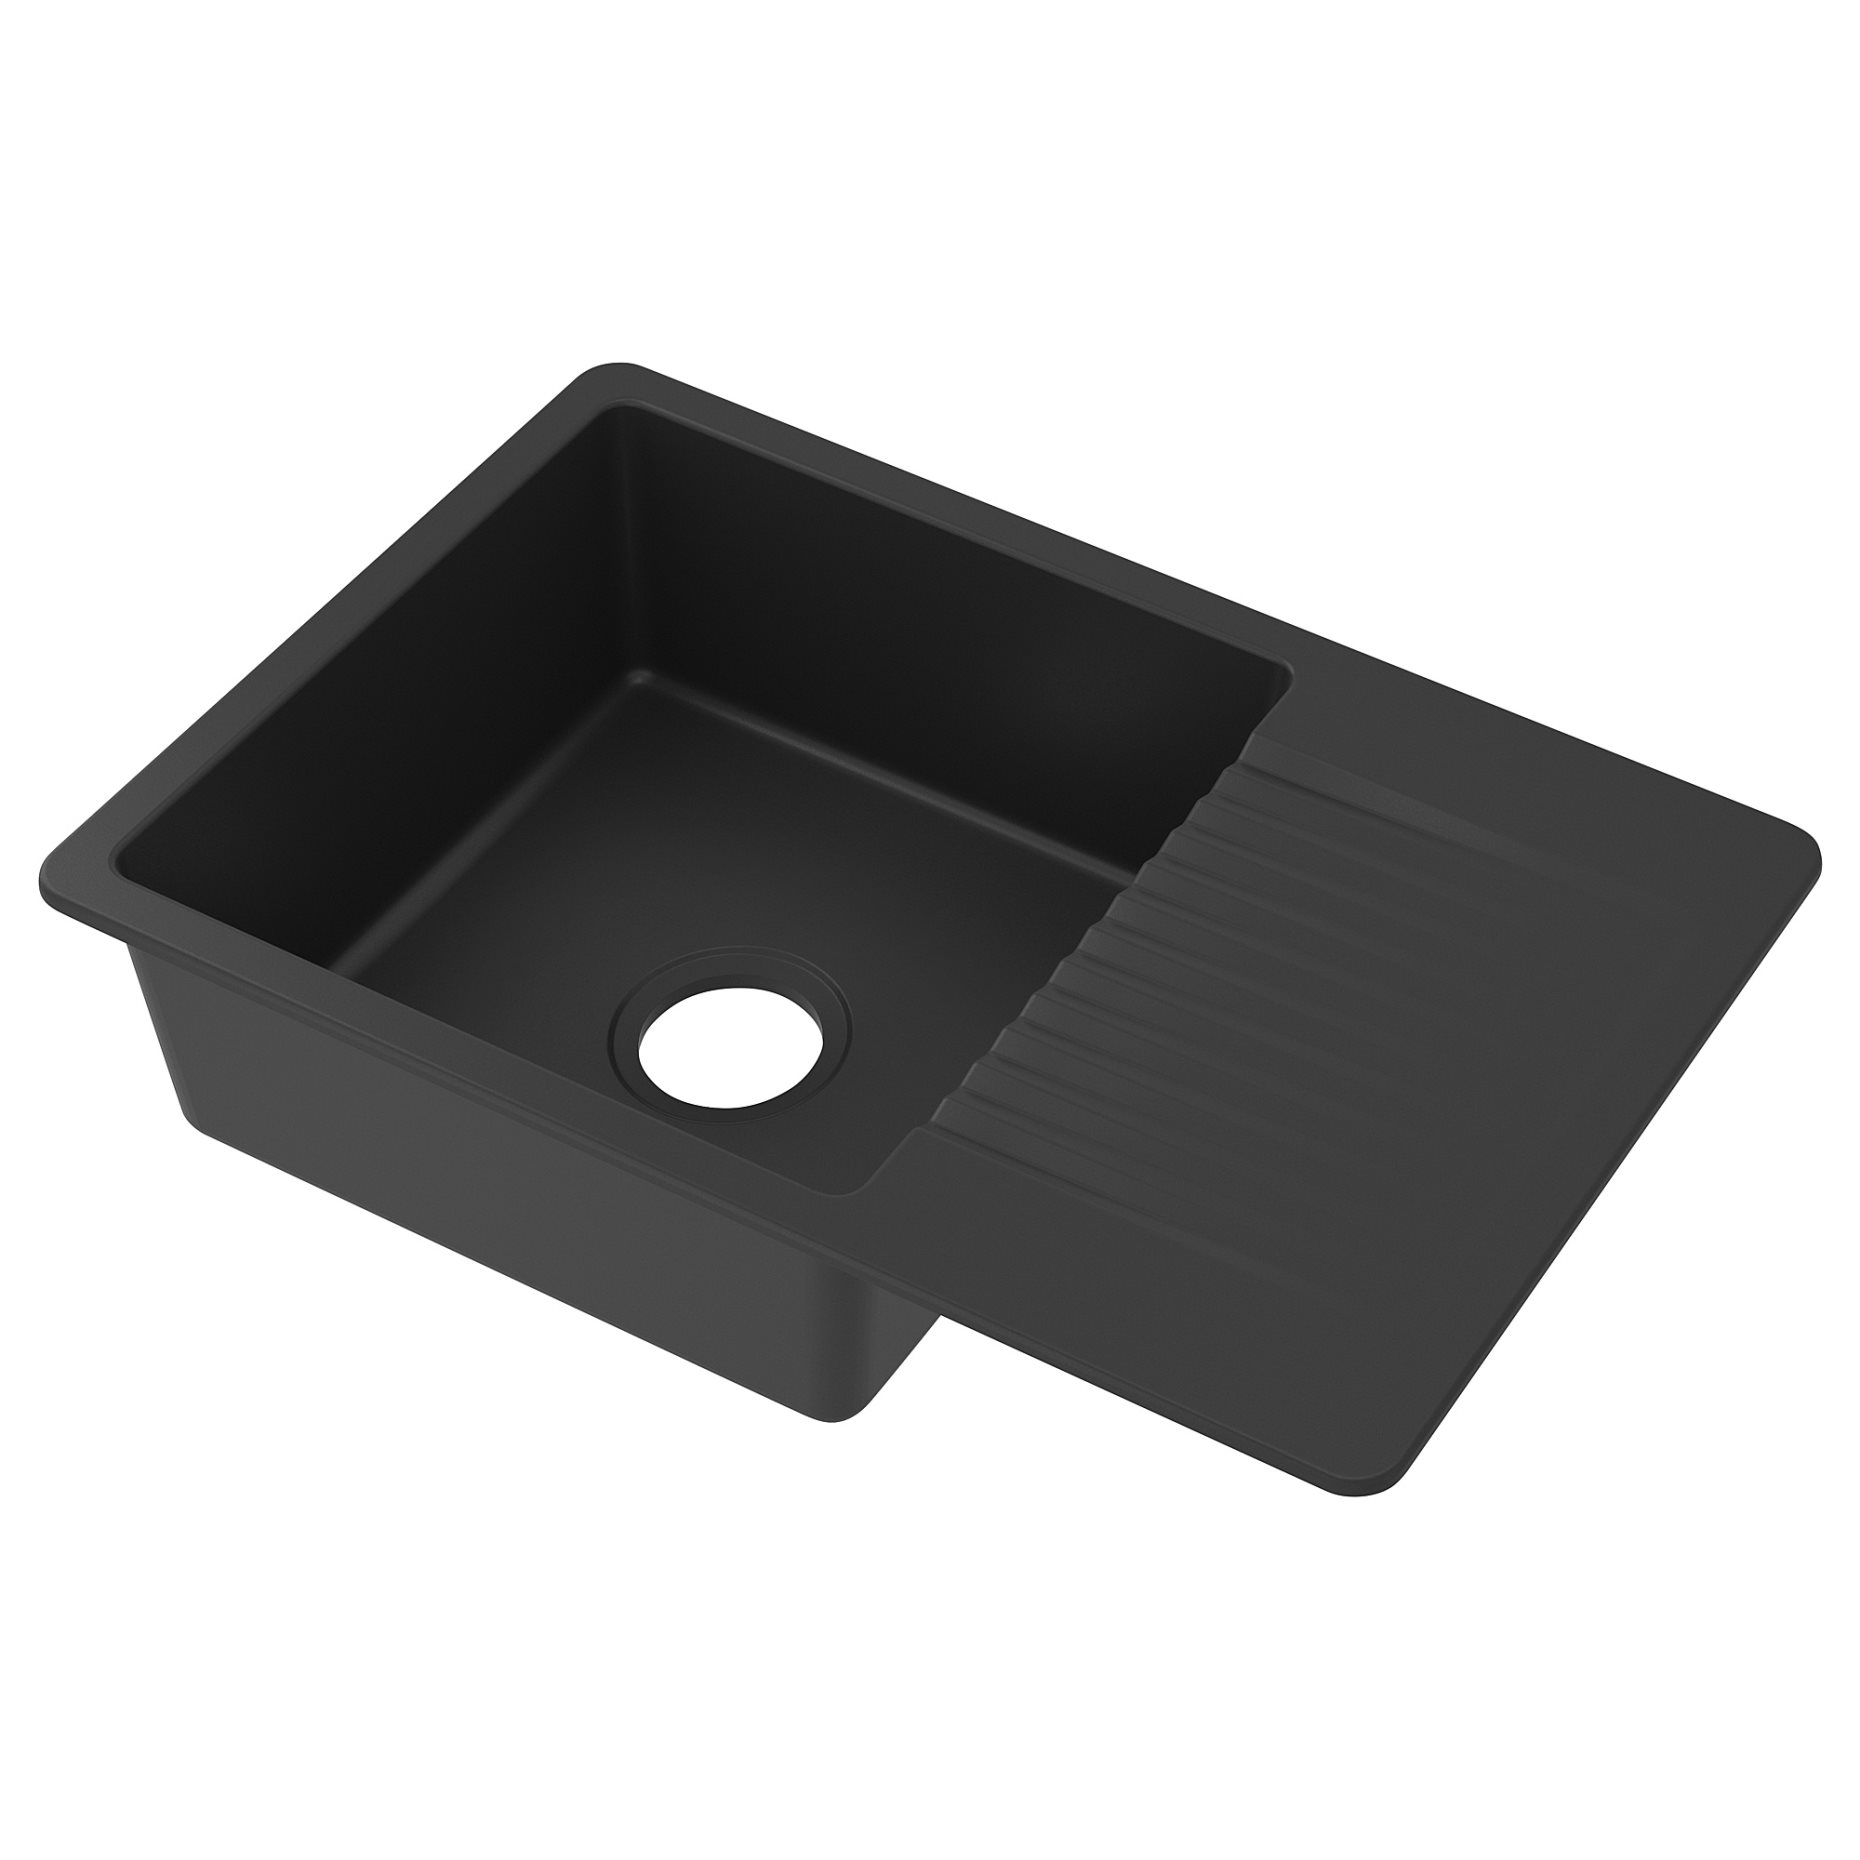 KILSVIKEN, inset sink 1 bowl with drainboard, 72x46 cm, 704.611.06